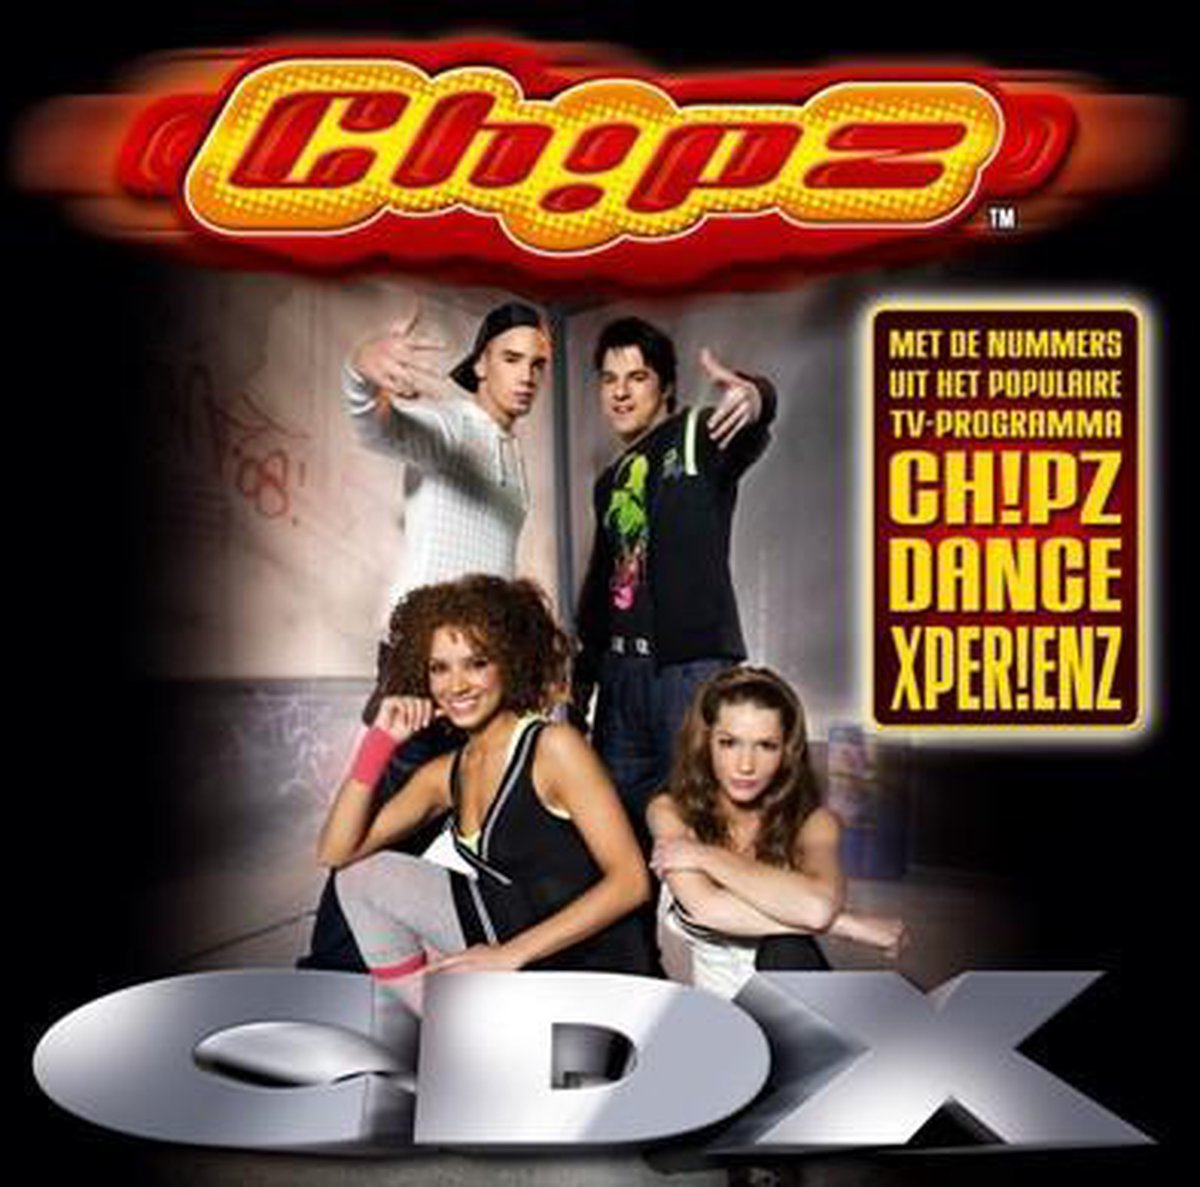 CDX (Chipz Dance Xper!enz 2008) - Ch!pz